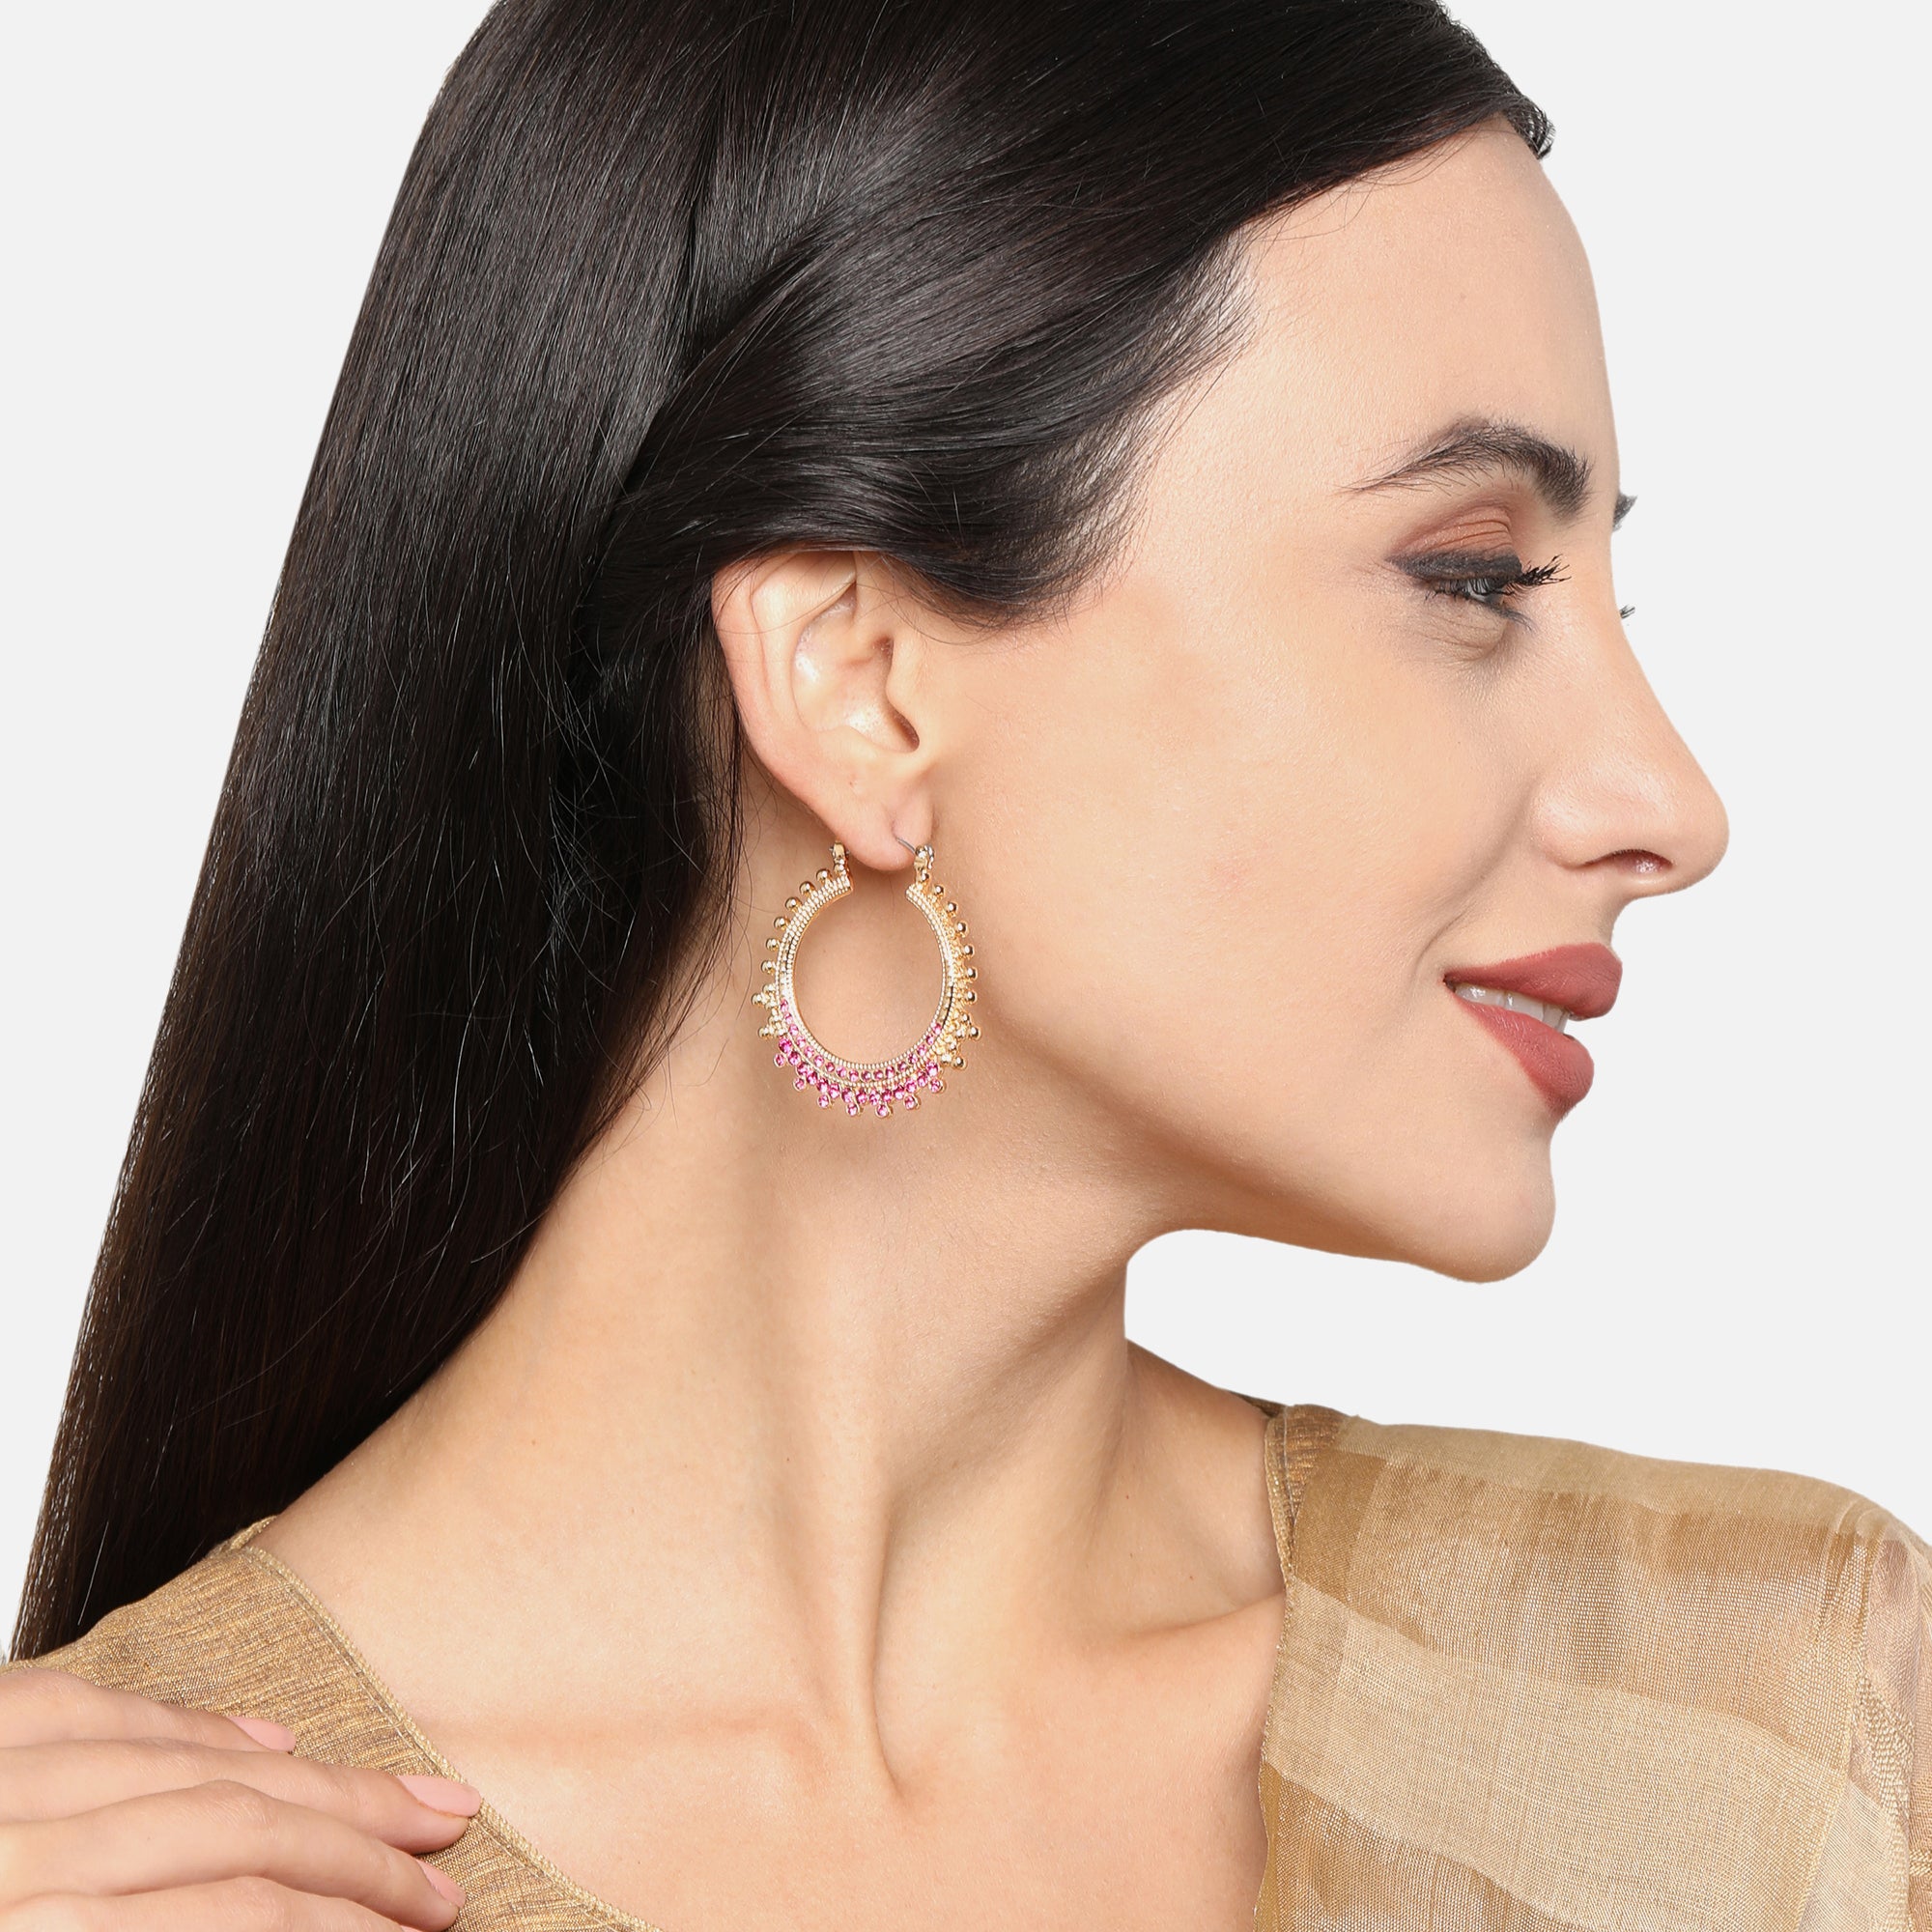 Hoop Earrings | Buy Hoop For Women Online - Accessorize India